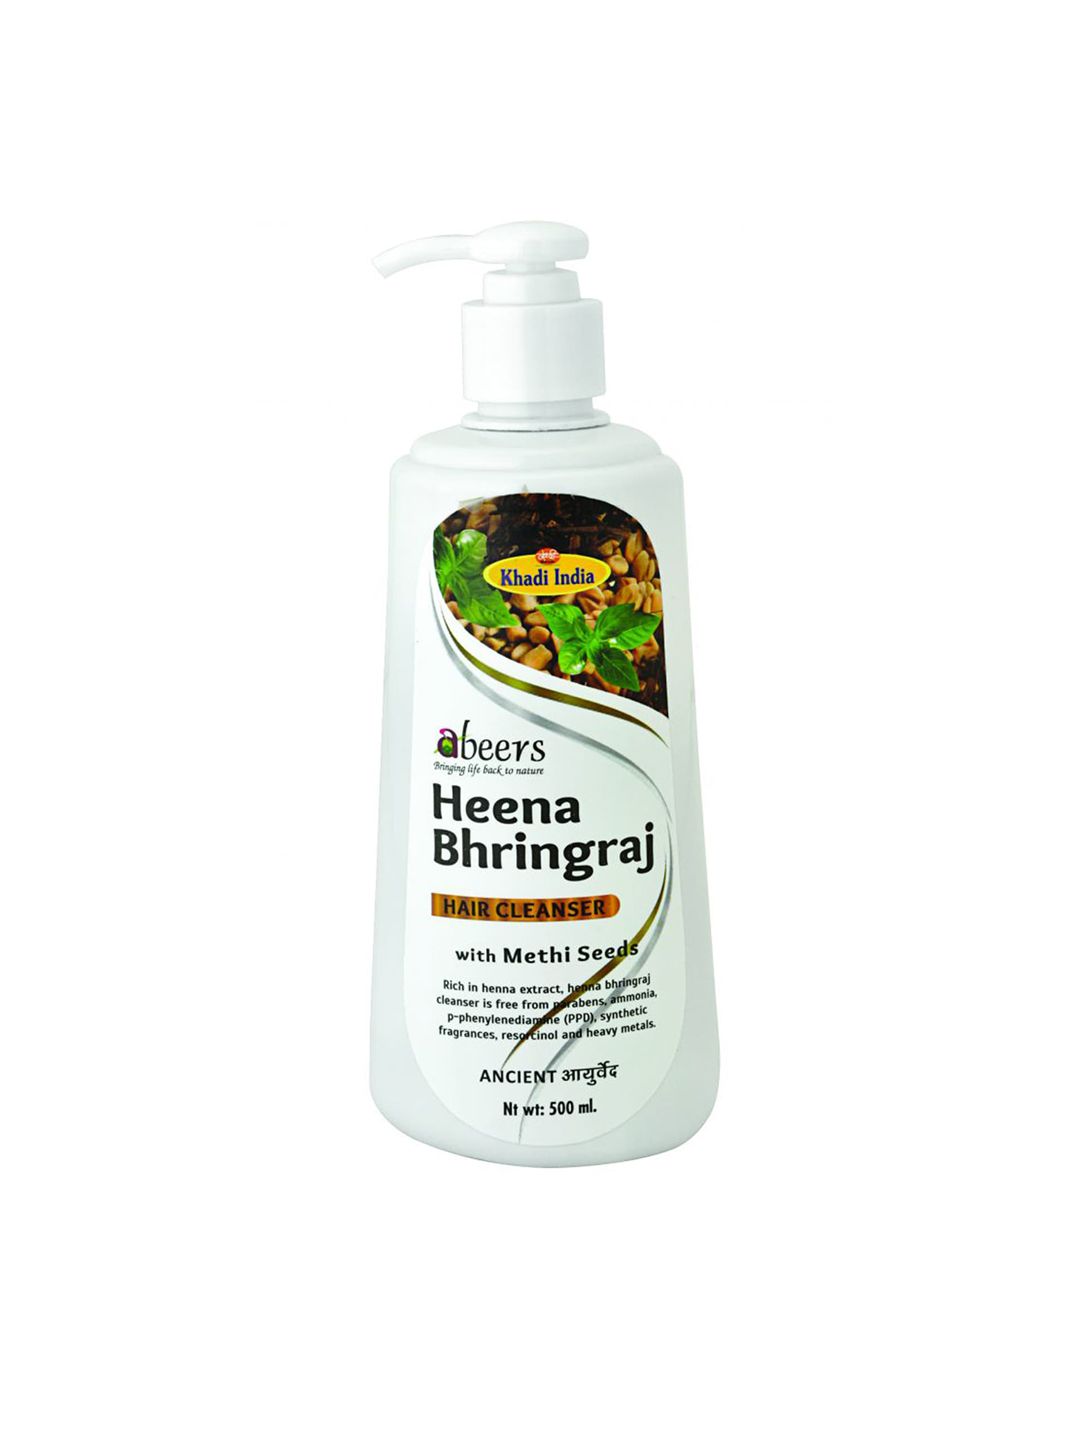 Abeers Ancient Heena Bhringraj Hair Cleanser With Methi Seeds 500ml Price in India